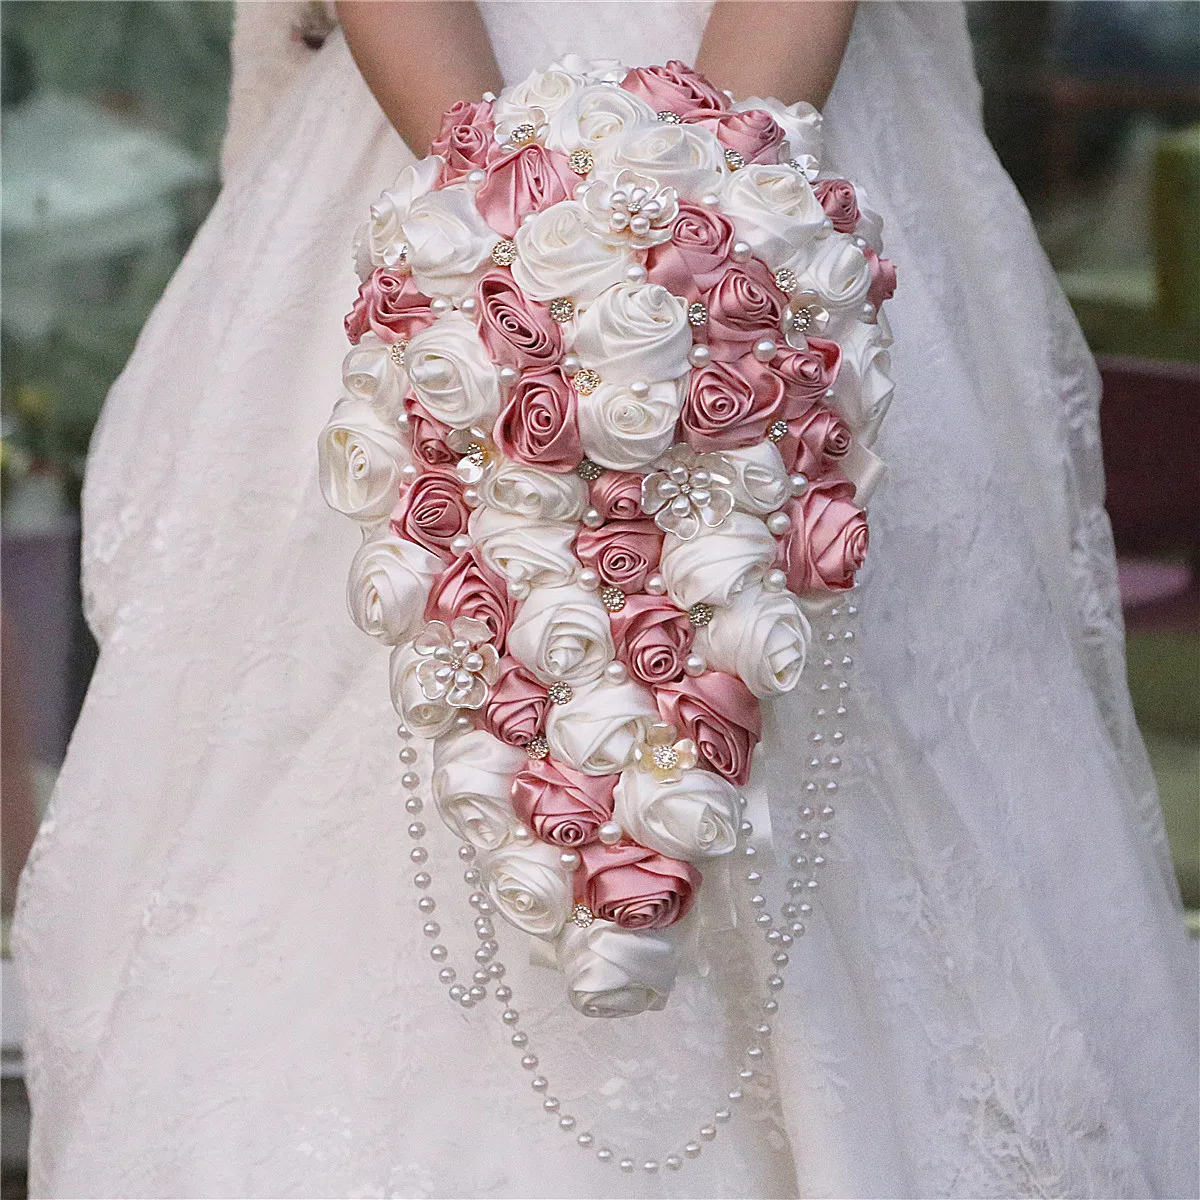 

Yannew Creamy Dusty Rose Bride Casading Wedding Bouquets with Rhinestone Pearl String Handamde Satin Rose Flowers Bridal Bouquet